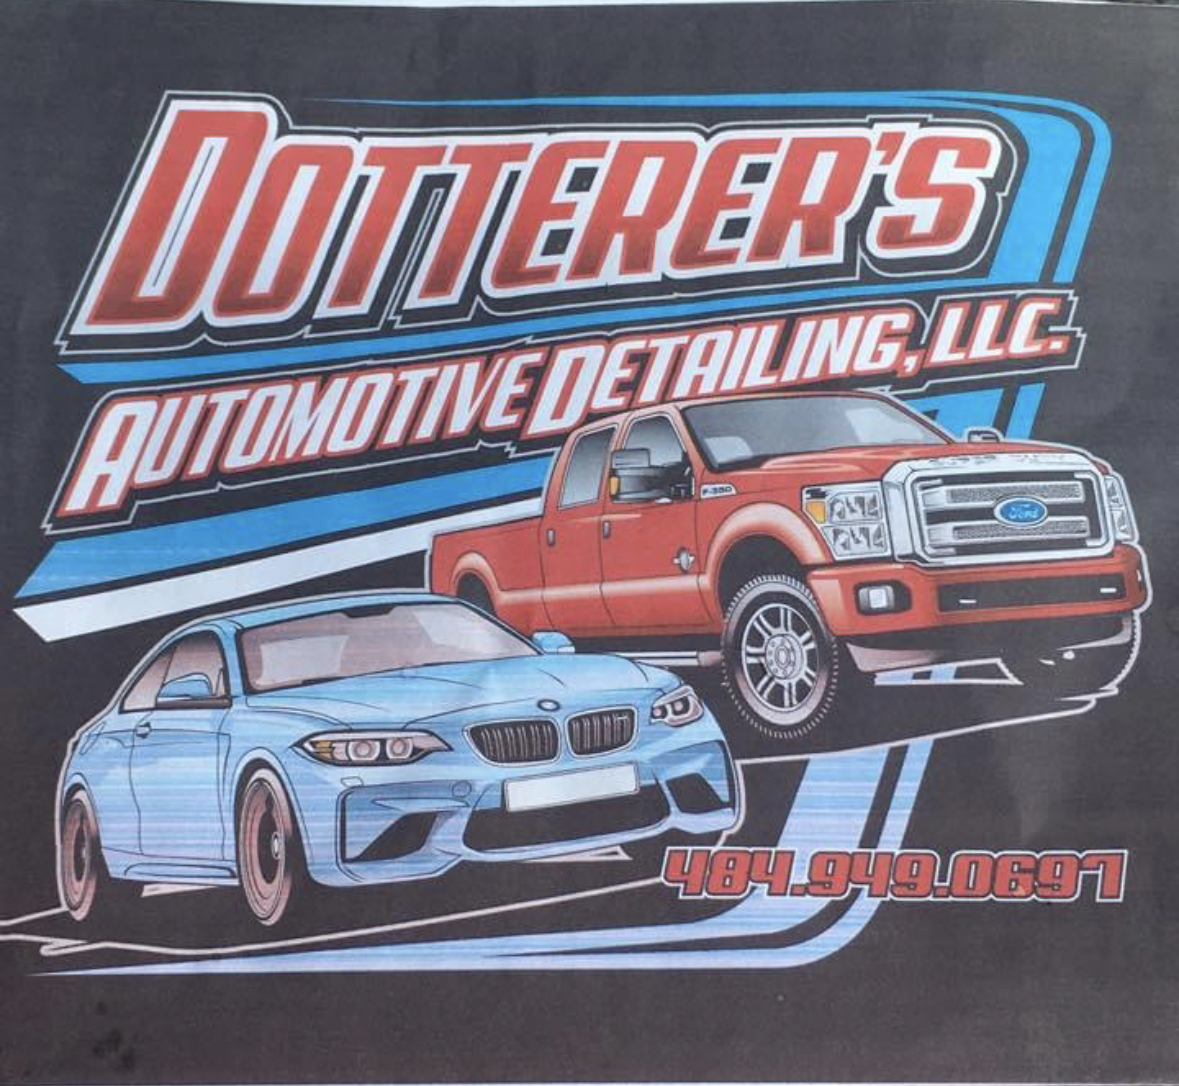 Dotterer’s Automotive Detailing 546 S Reading Ave, Boyertown Pennsylvania 19512